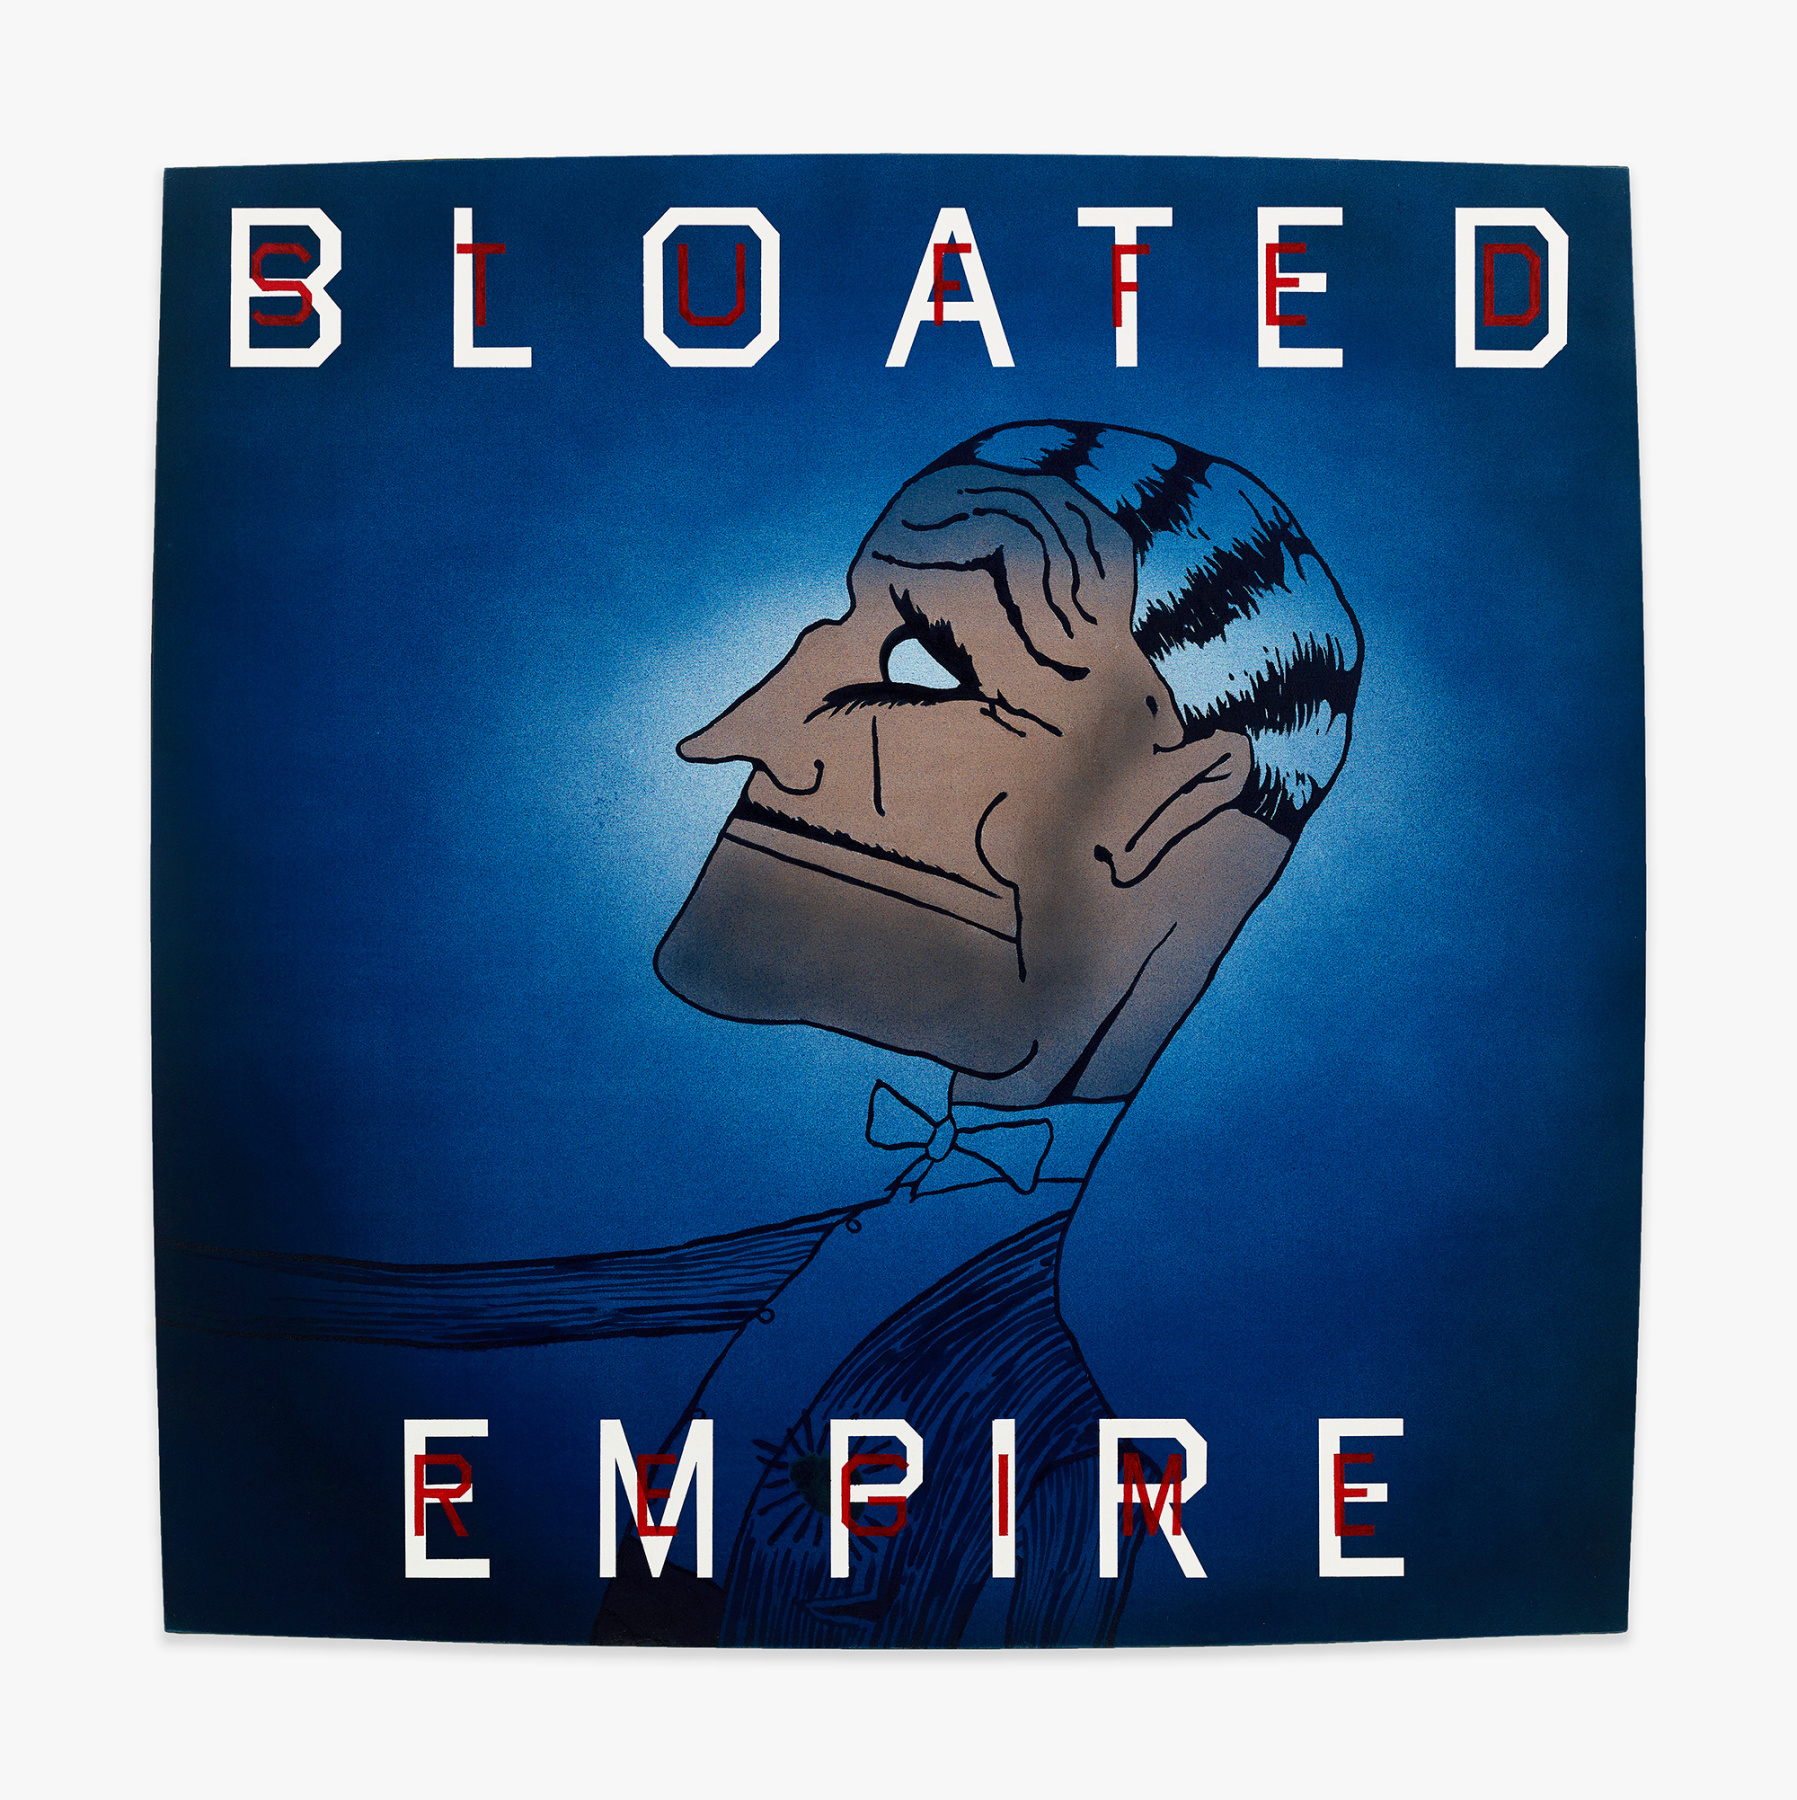 Ed Ruscha Bloated Empire, Stuffed Regime, 1997